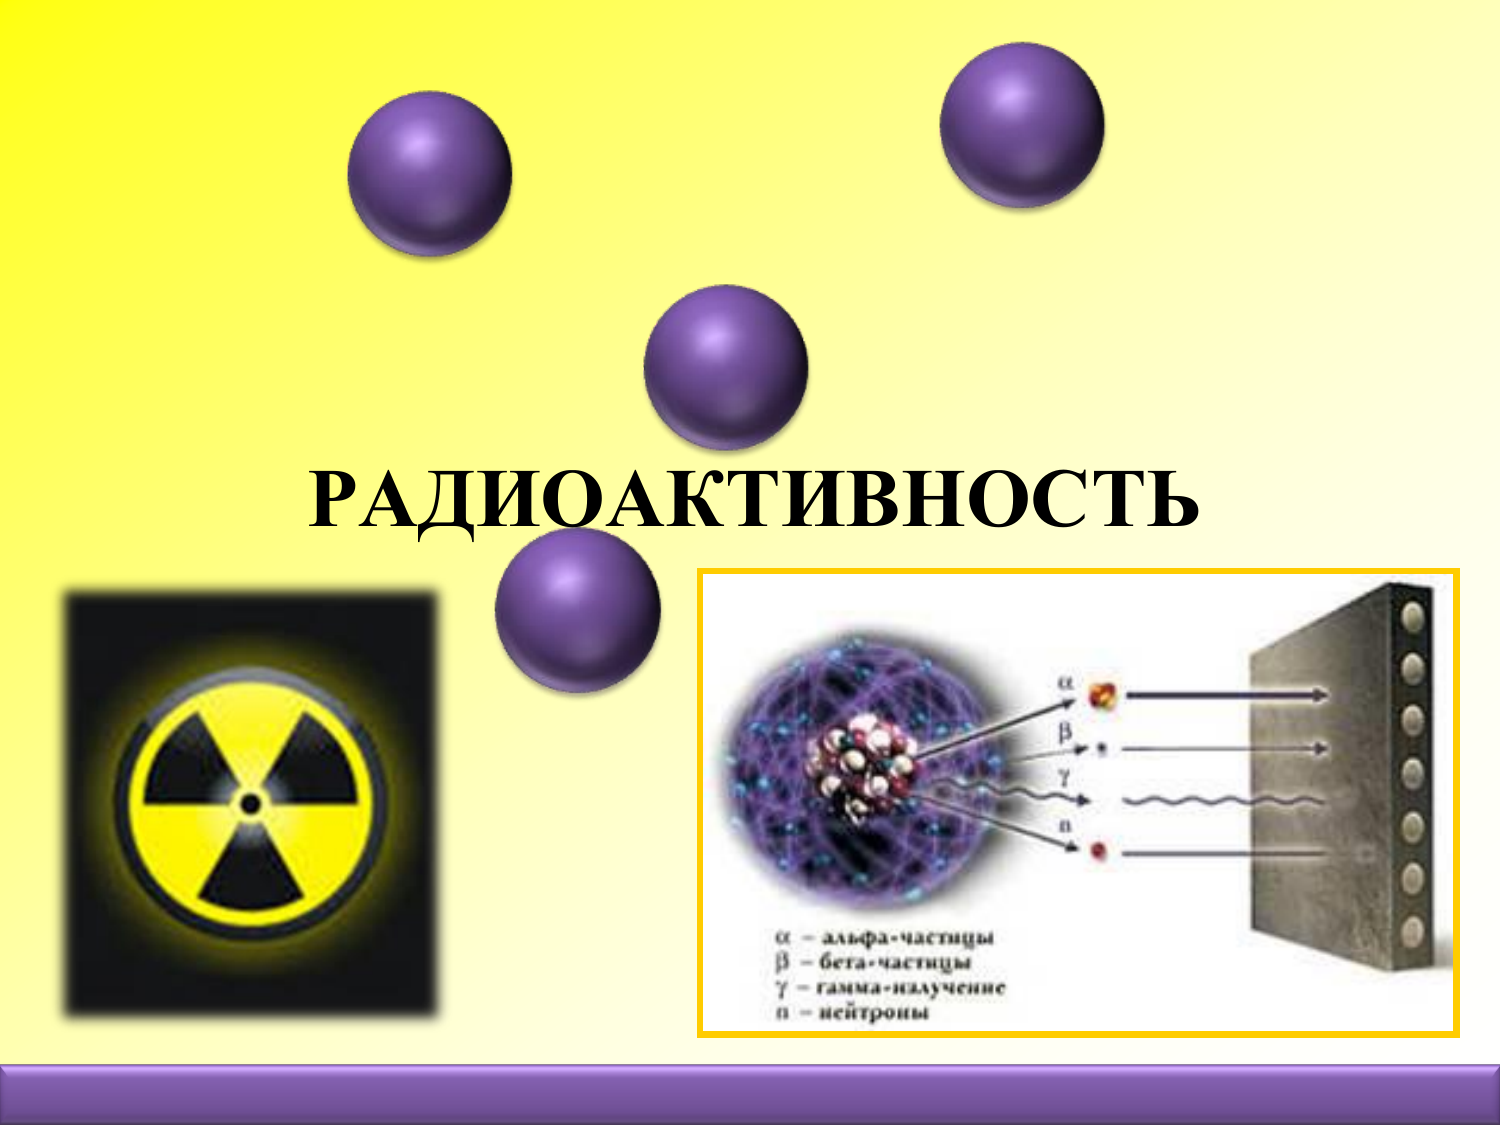 Излучение атома физика. Радиоактивность. Радиоактивность физика. Радиация в физике. Радиоактивное излучение физика.